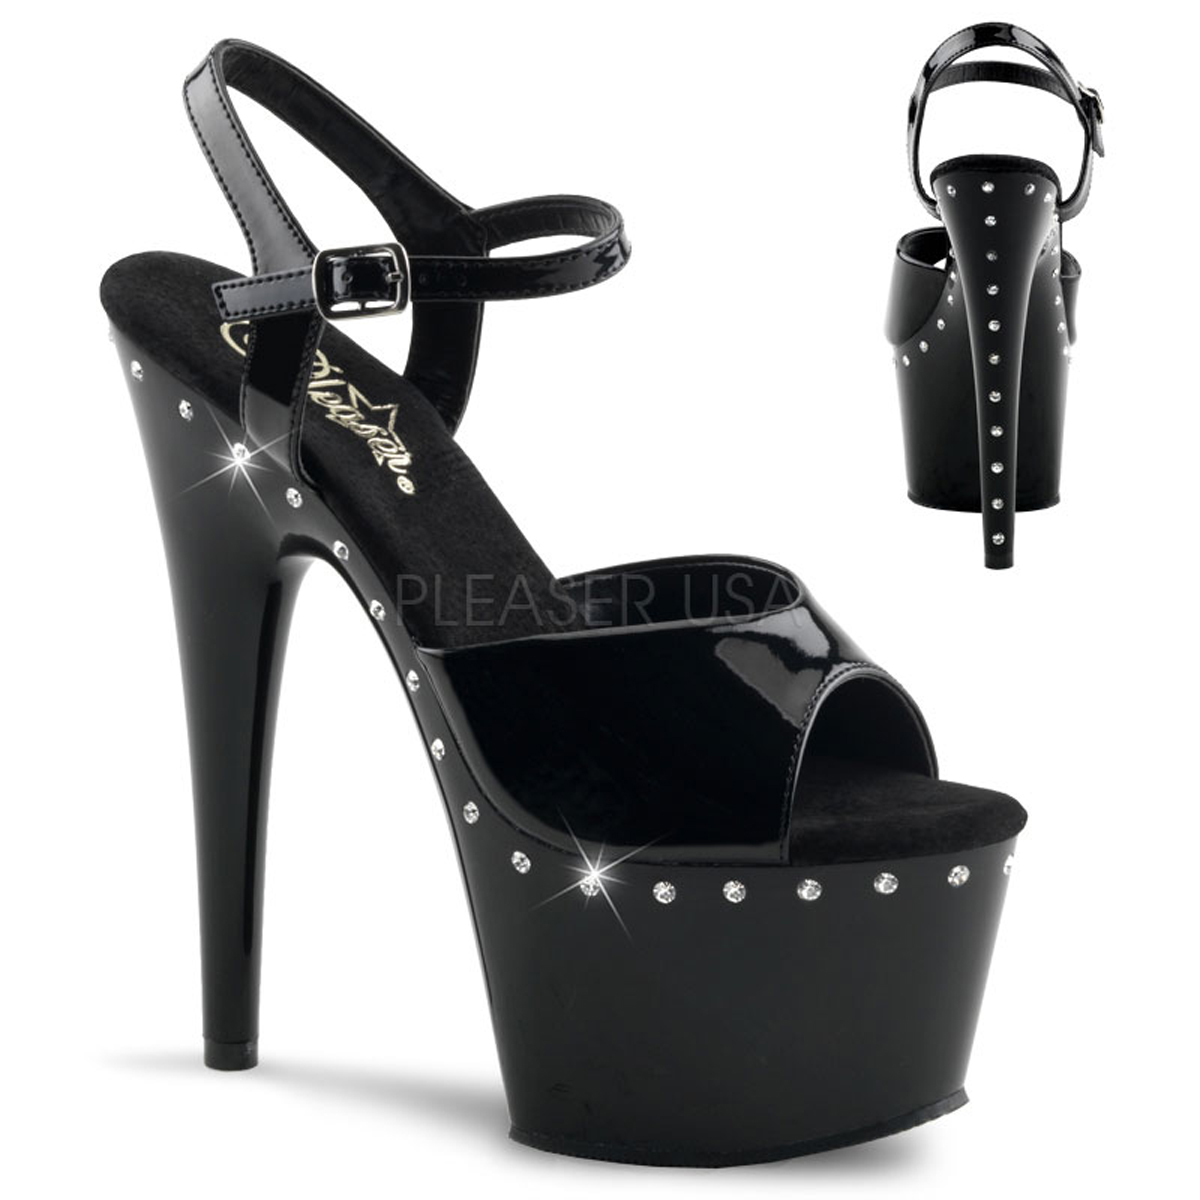 Pleaser | REVOLVER-709G Platform Sandal | REV709G/GG/M | Available online |  SexyShoes.com – SEXYSHOES.COM